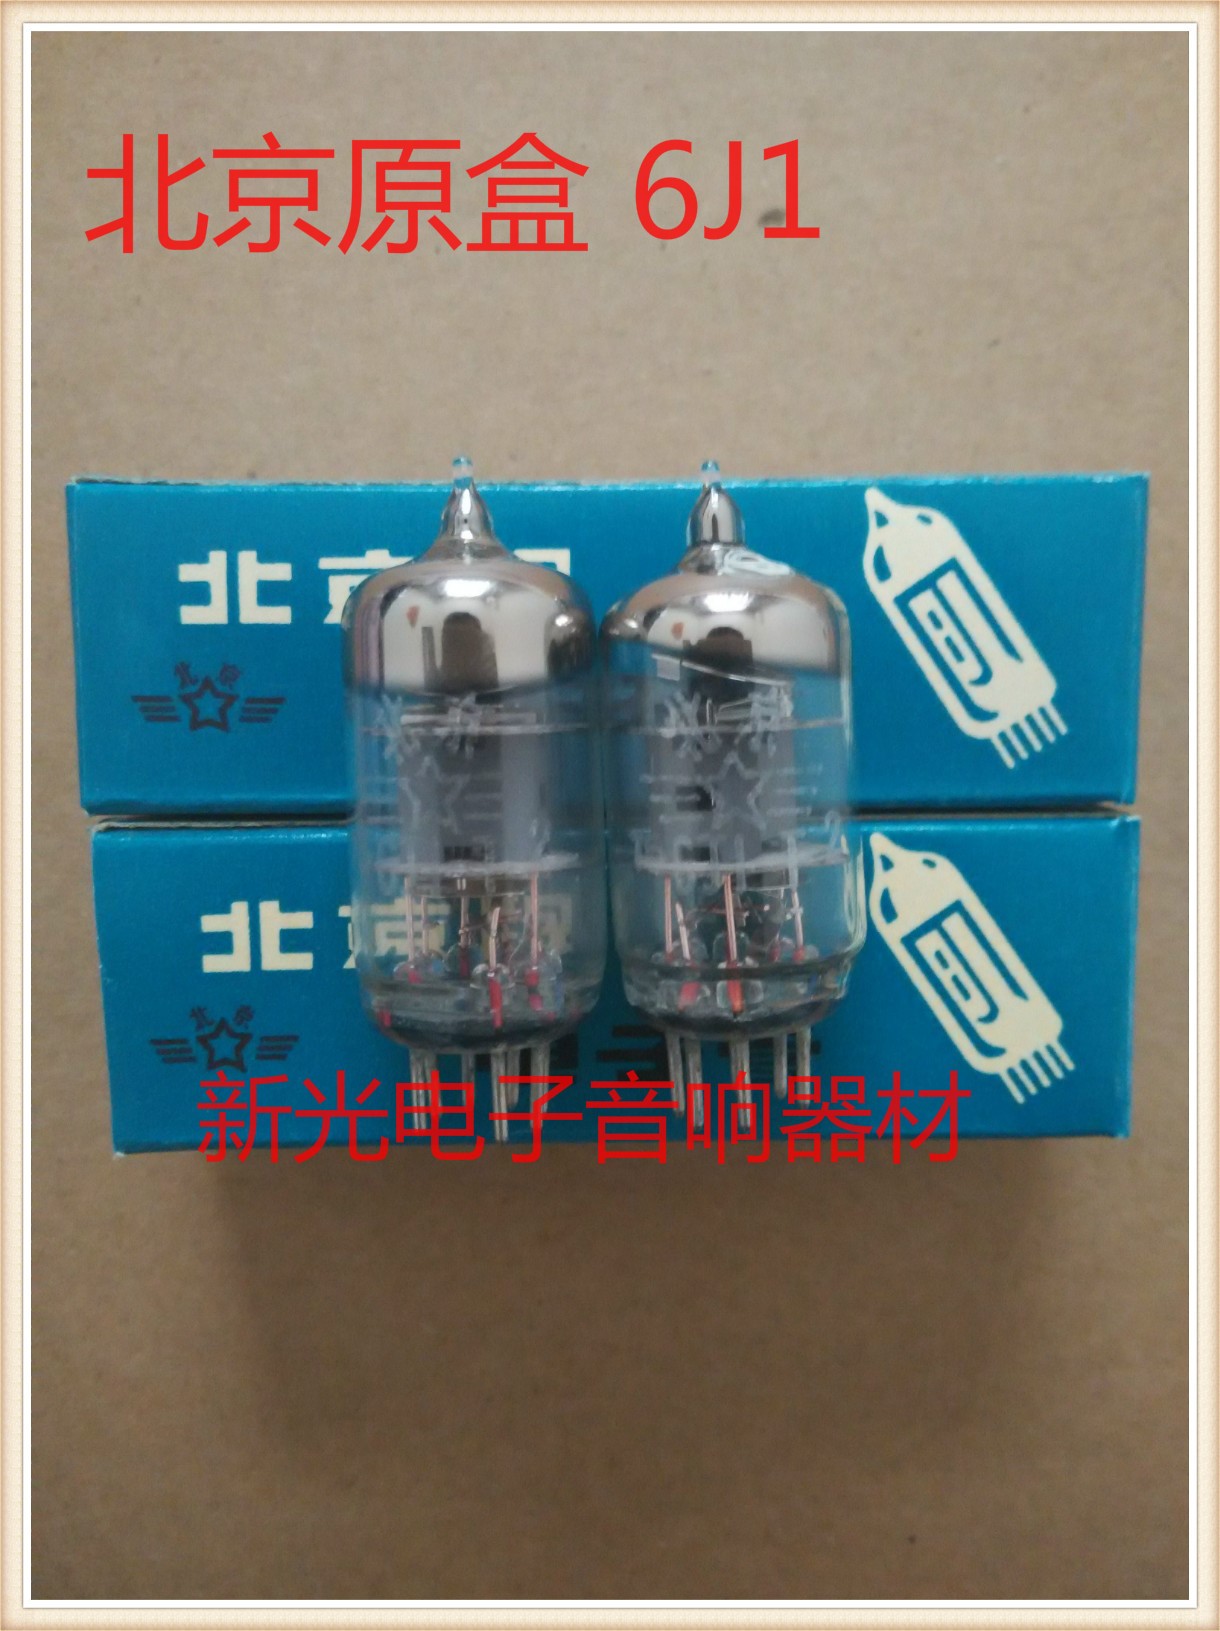 Brand new Beijing 6J1 Electronic Tube T Generation 5654 6AK5 EF95 EF95 CV4010 CV850 offers pairing-Taobao